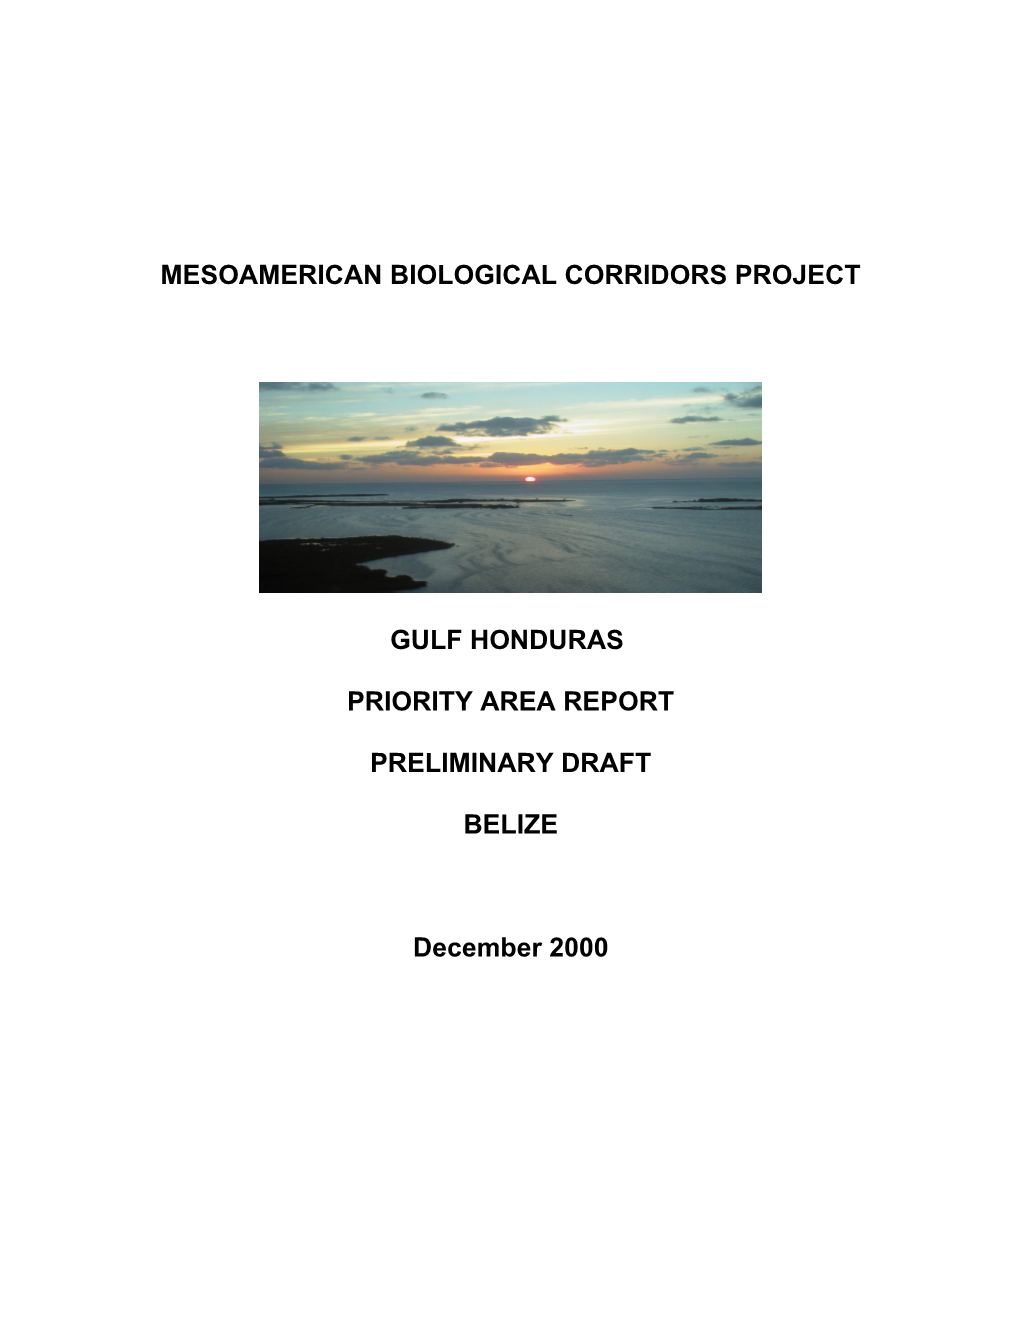 Mesoamerican Biological Corridors Project